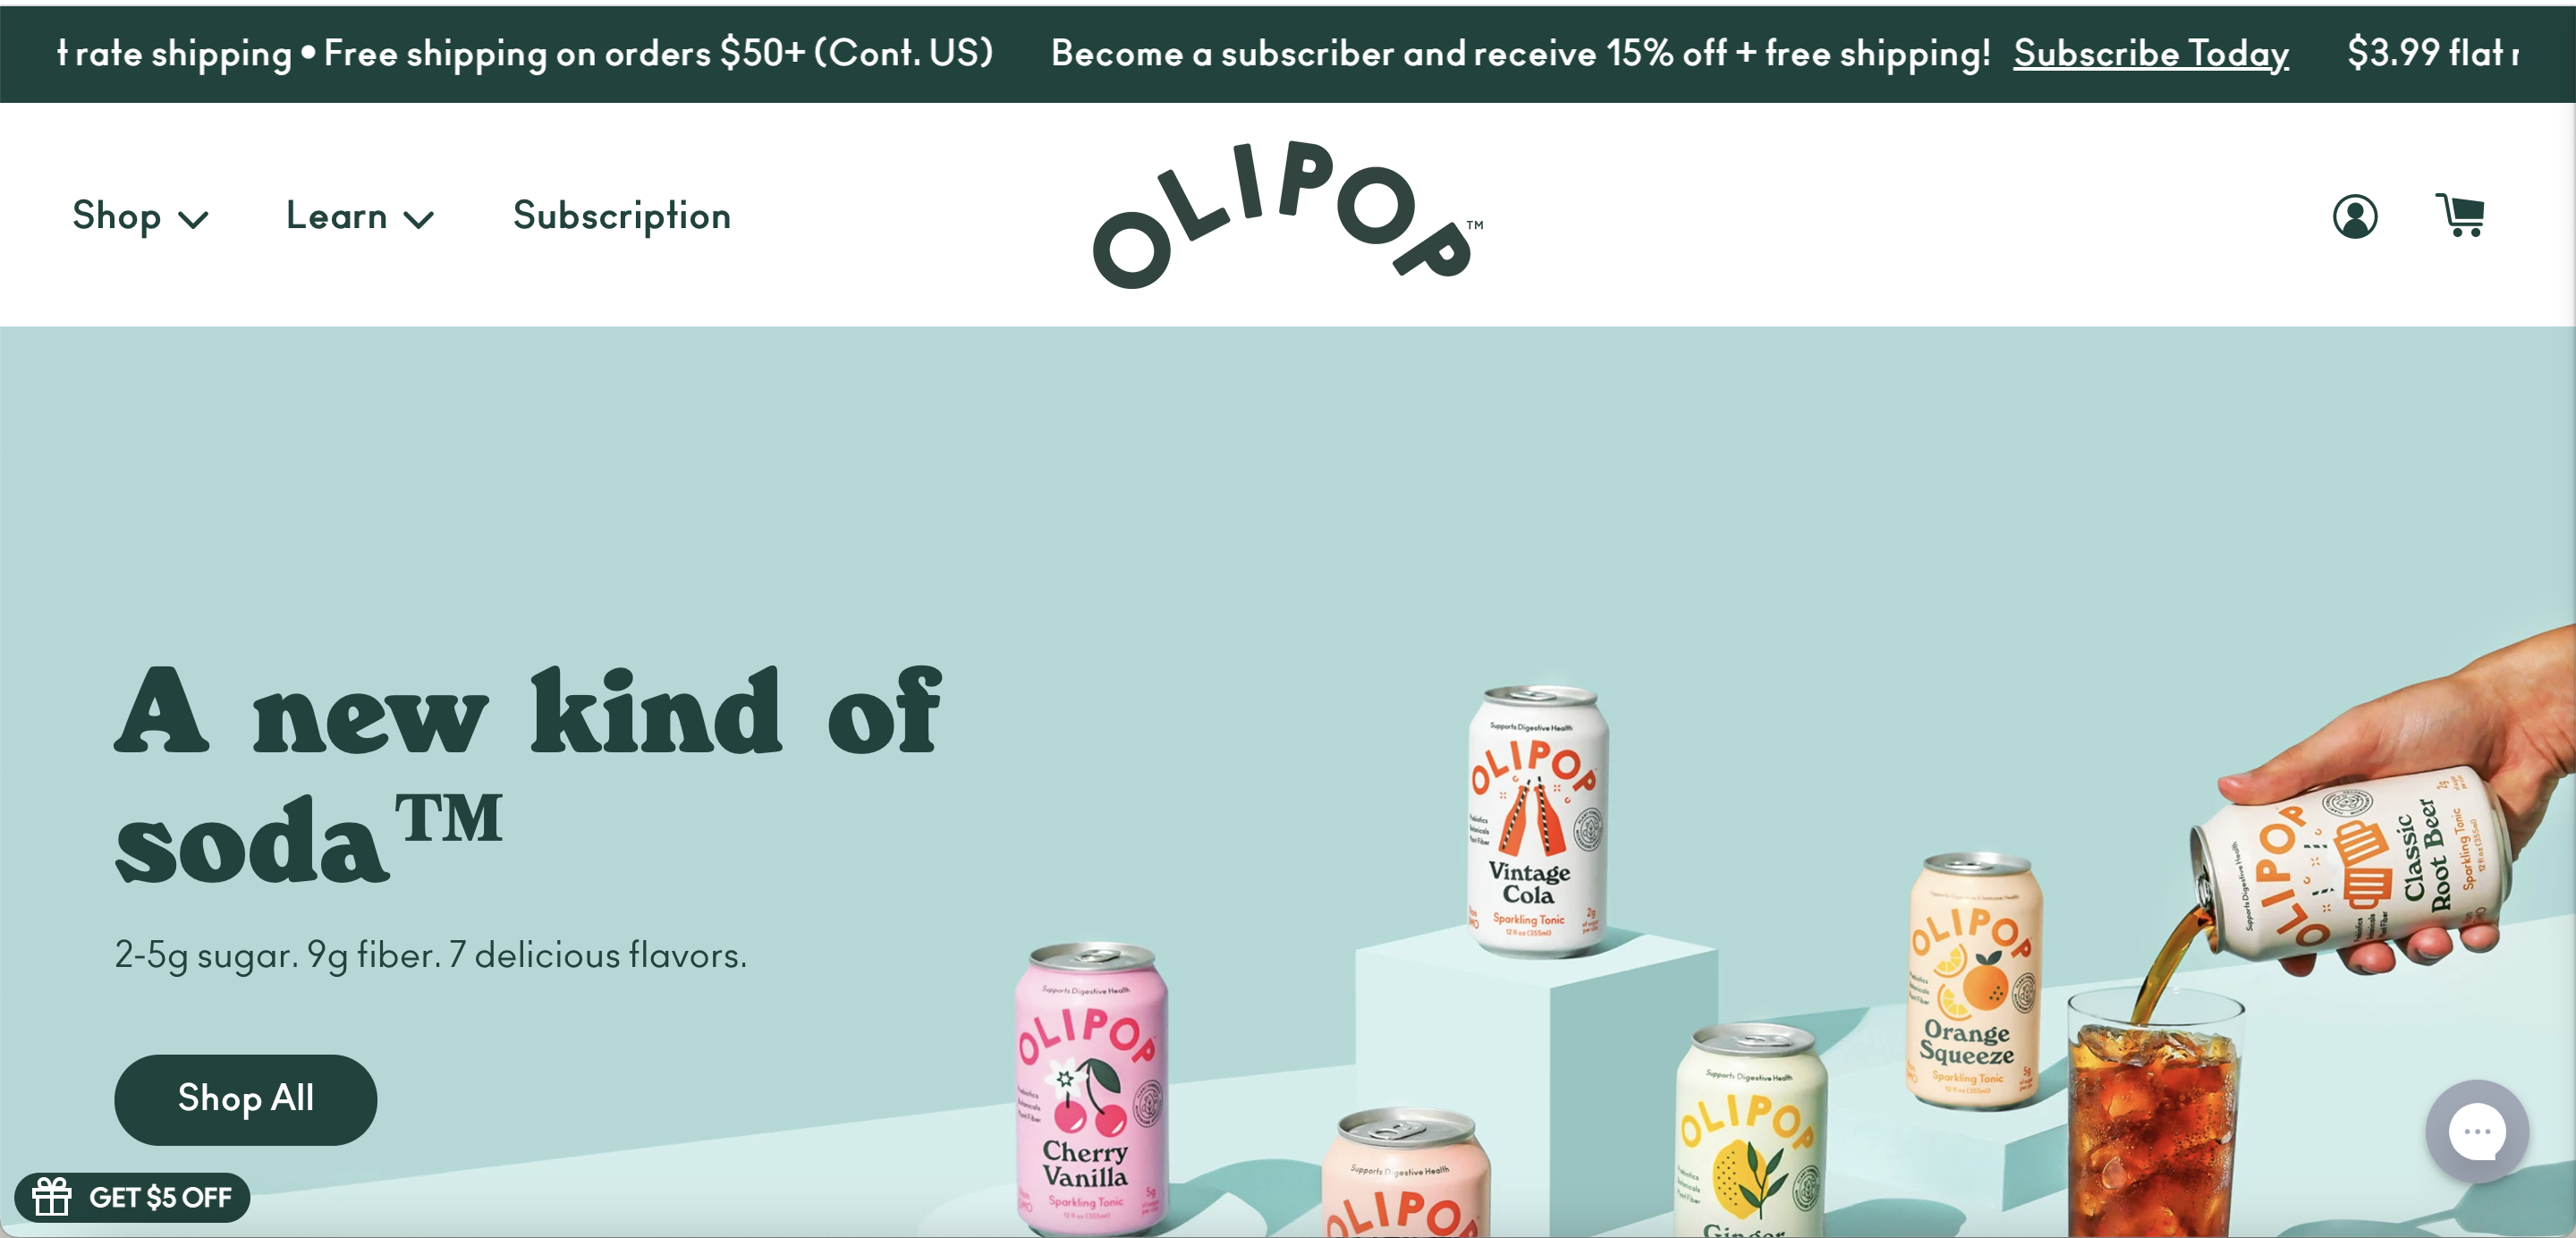 Screenshot from Olipop's website